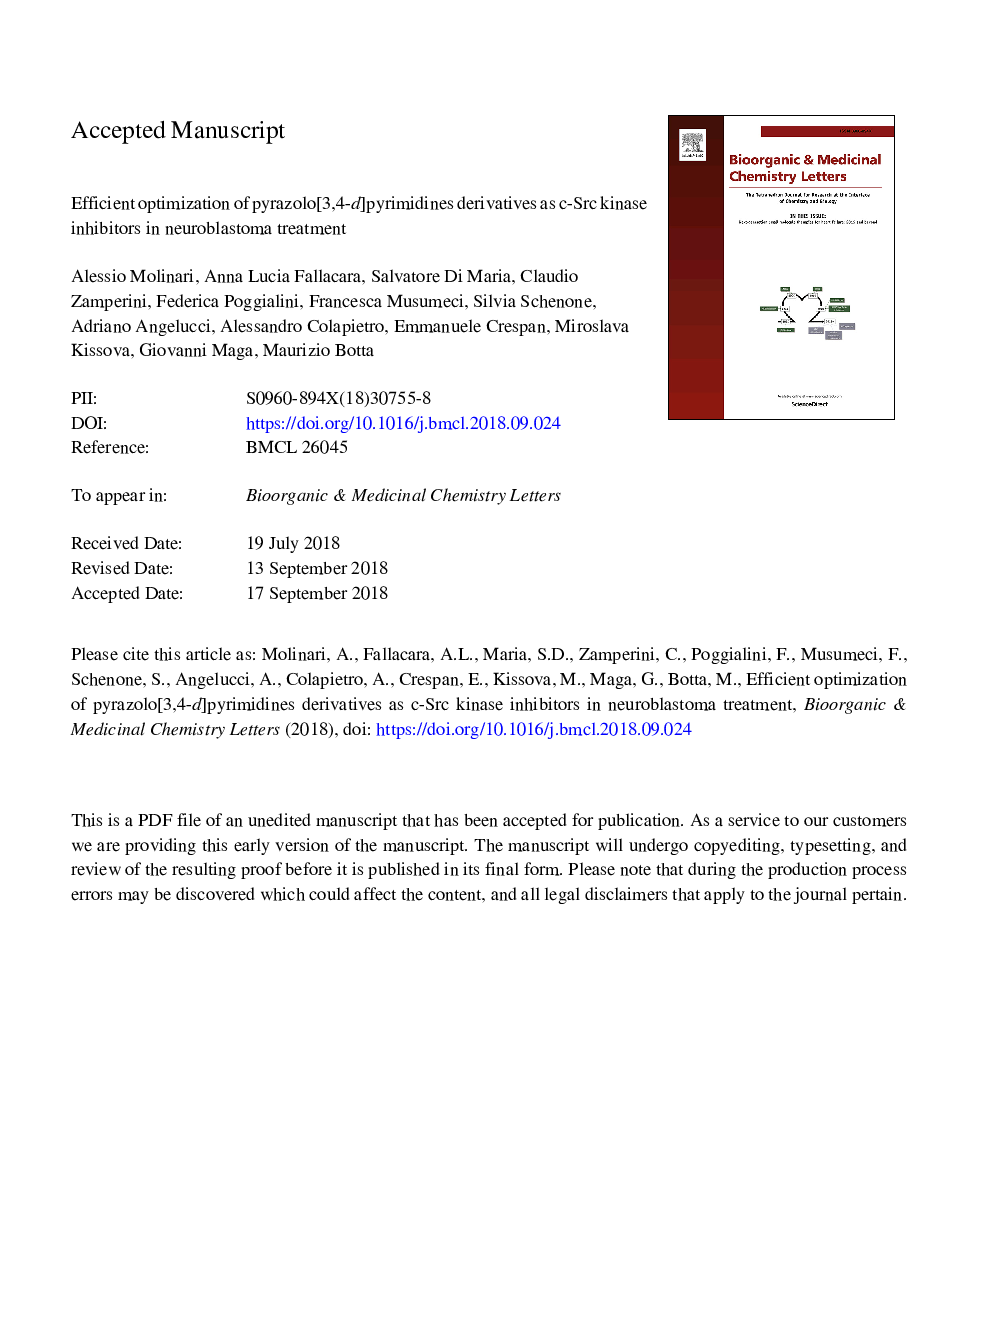 Efficient optimization of pyrazolo[3,4-d]pyrimidines derivatives as c-Src kinase inhibitors in neuroblastoma treatment